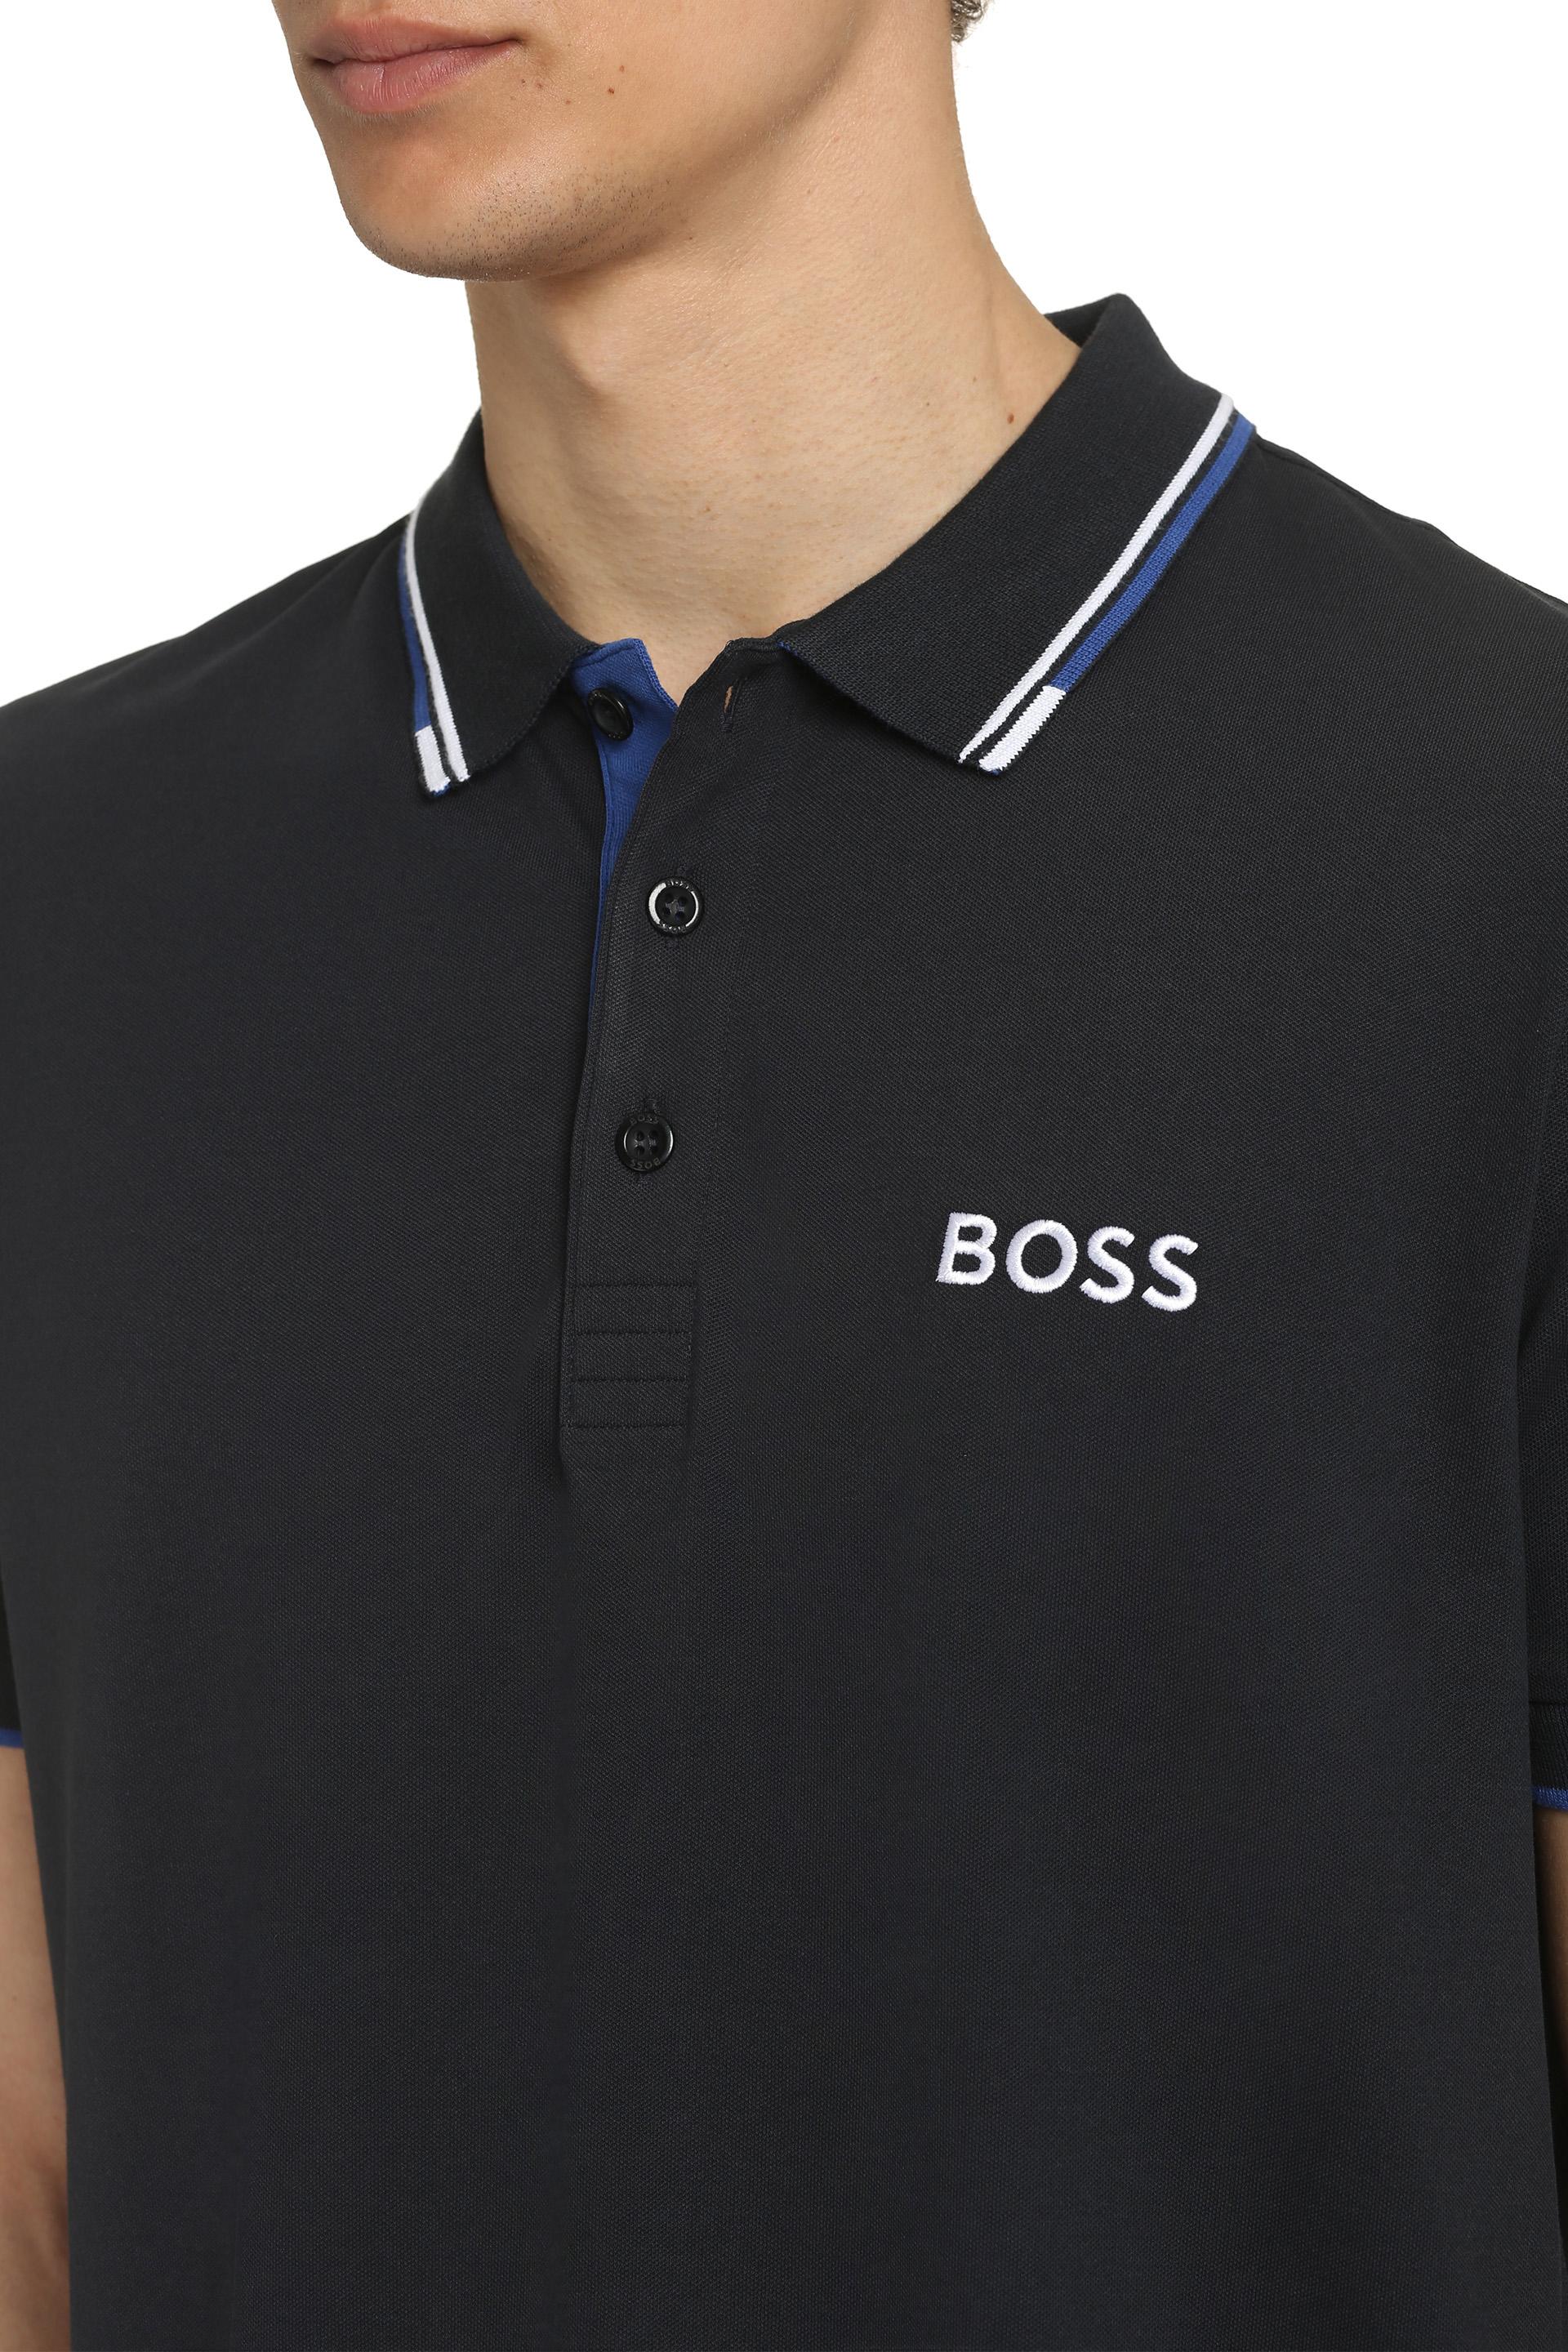 BOSS by HUGO BOSS Logo Embroidery Piqué Polo Shirt in Black for Men | Lyst